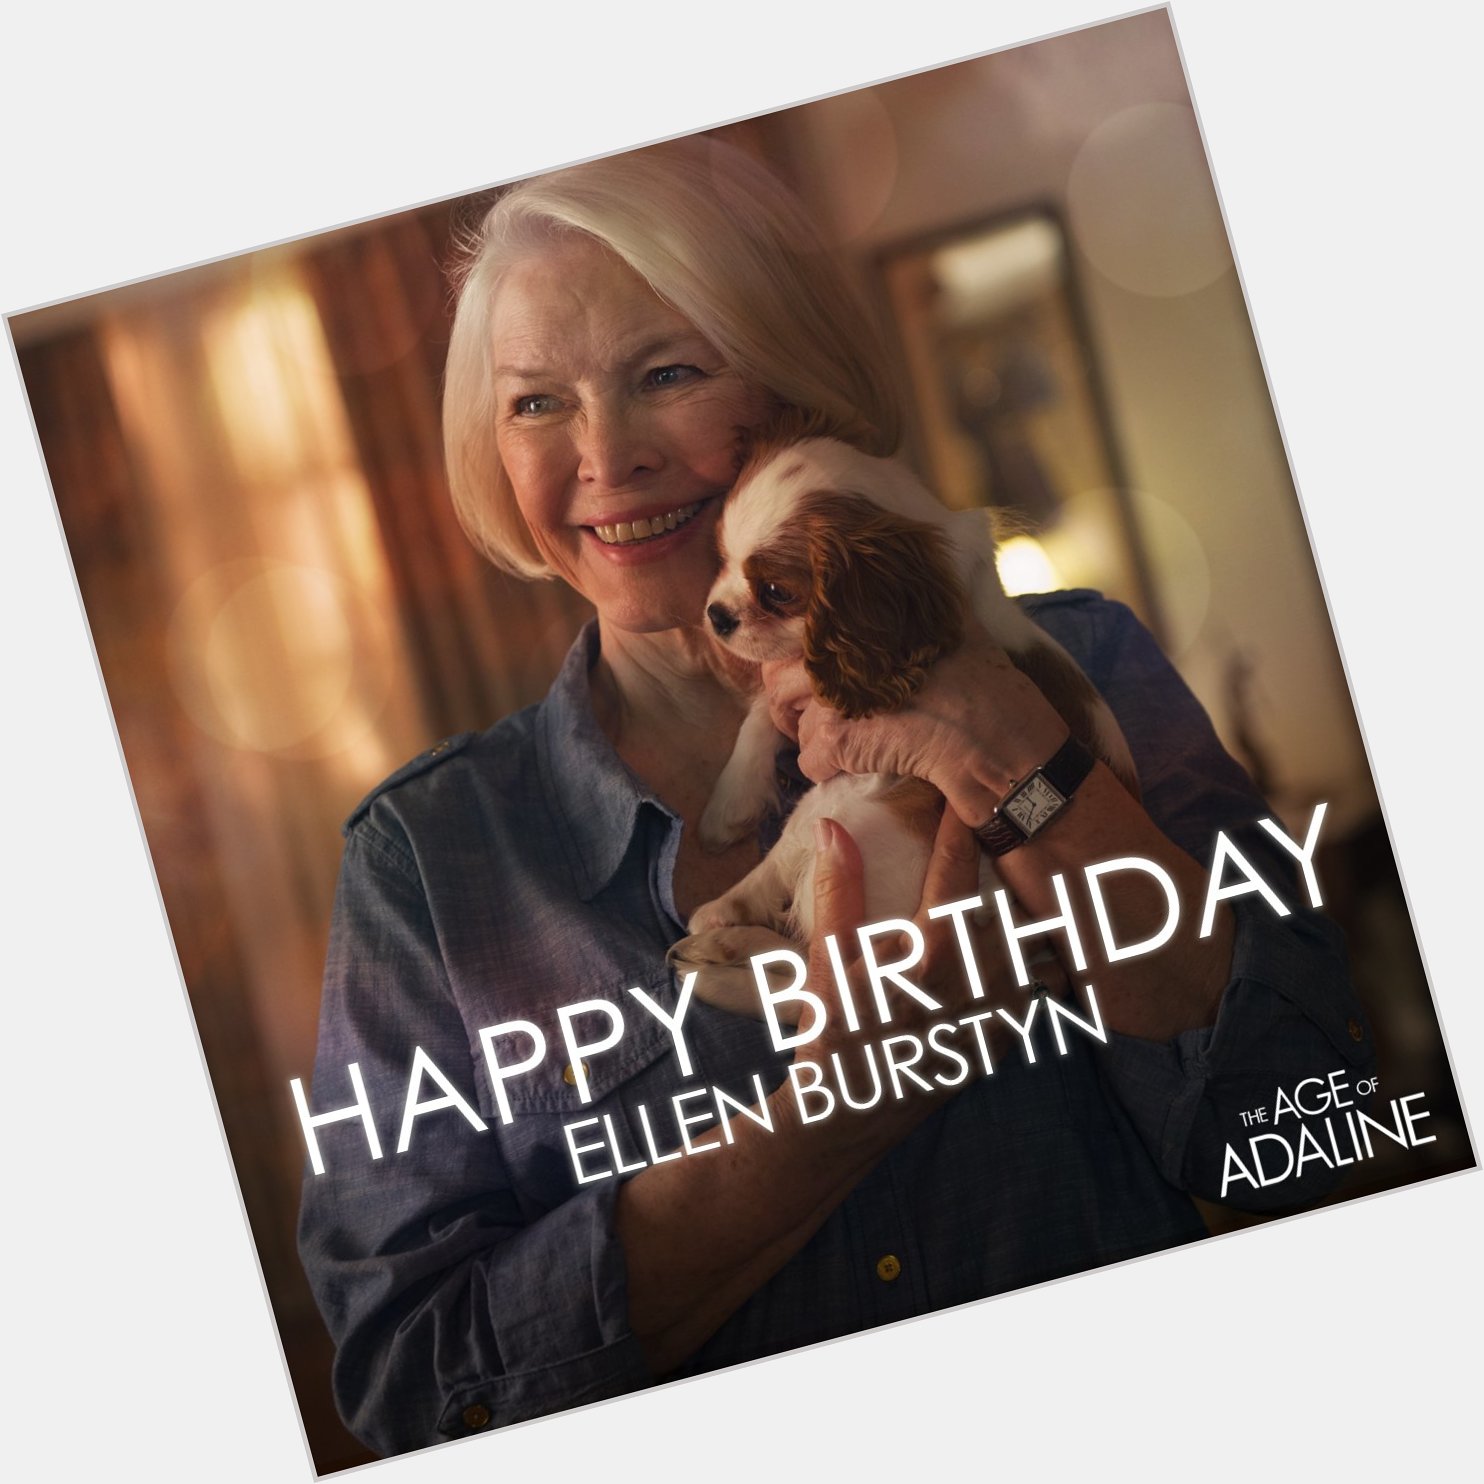 Ellen Burstyn always lights up the screen. Wishing her a happy birthday today.  